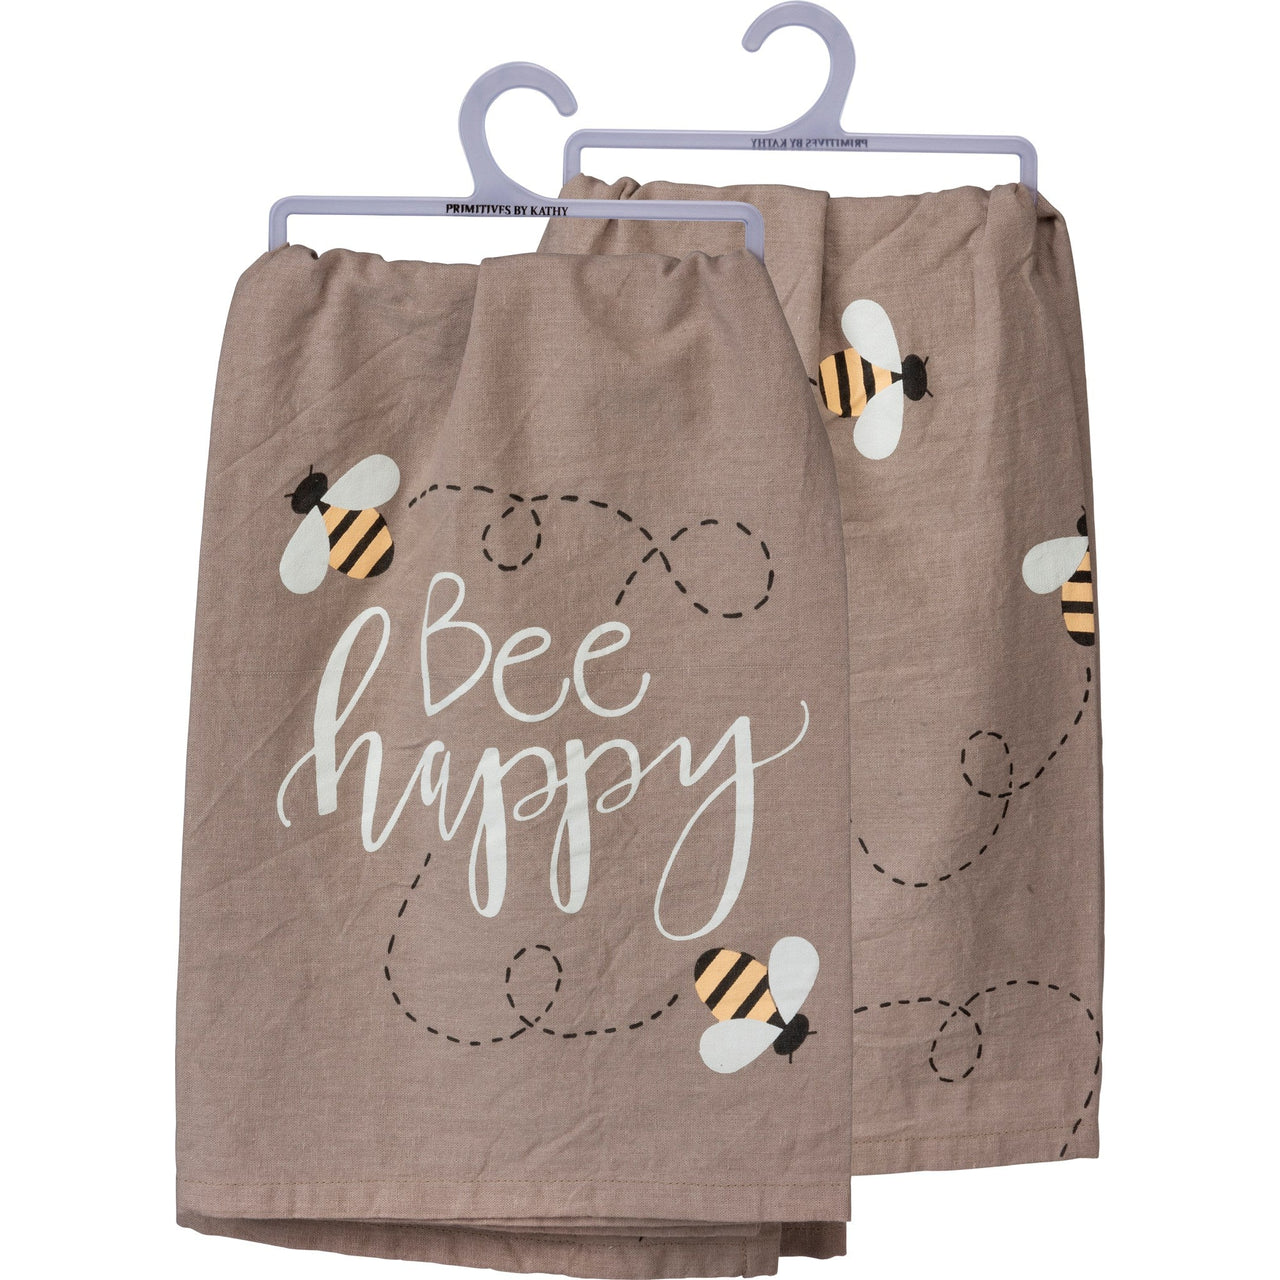 Dish Towel - Bee Happy